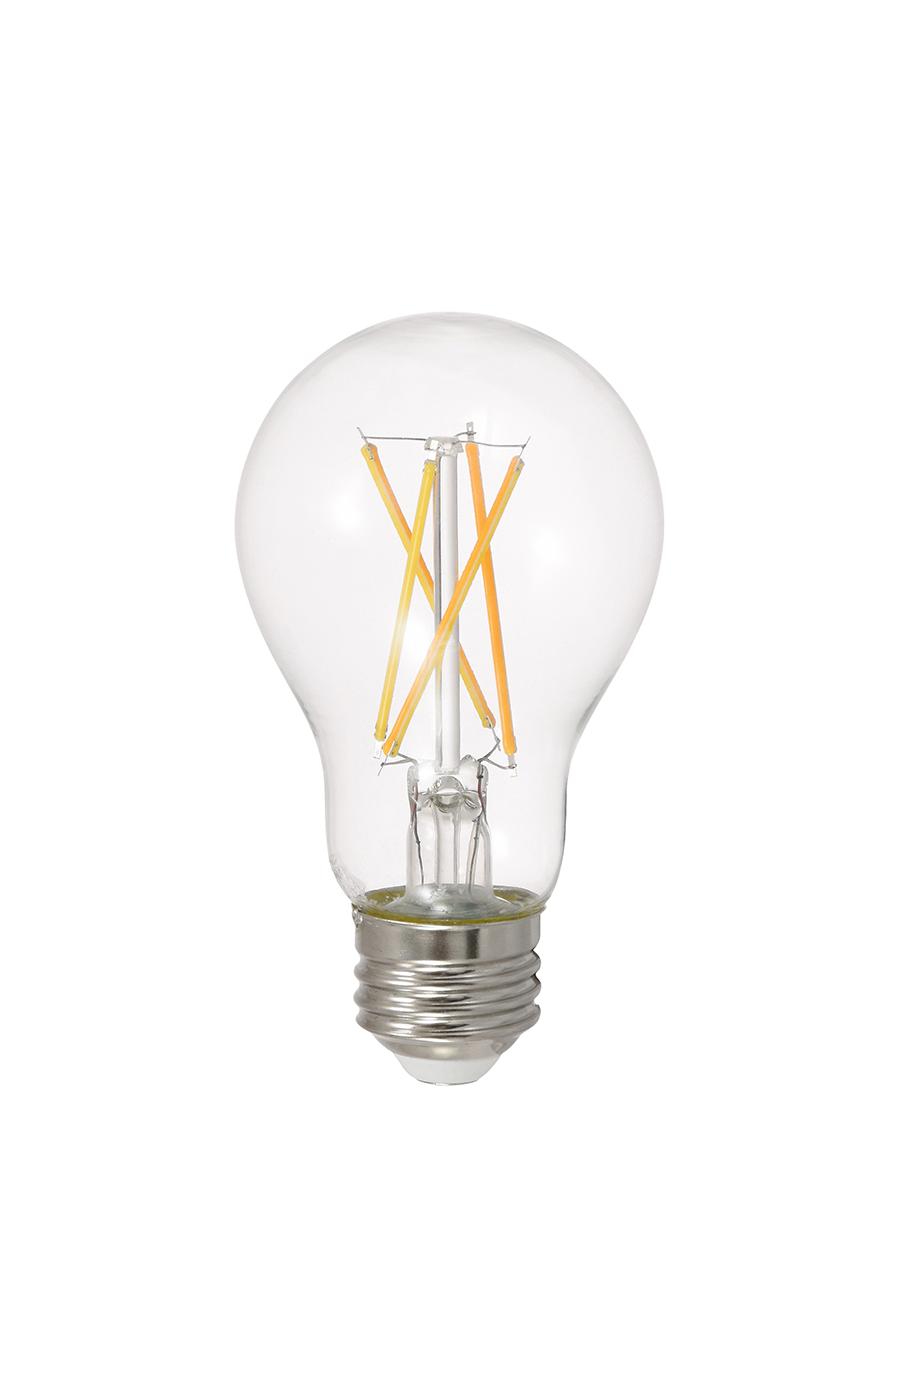 Sylvania TruWave A19 60-Watt Clear LED Light Bulbs - Daylight; image 2 of 2